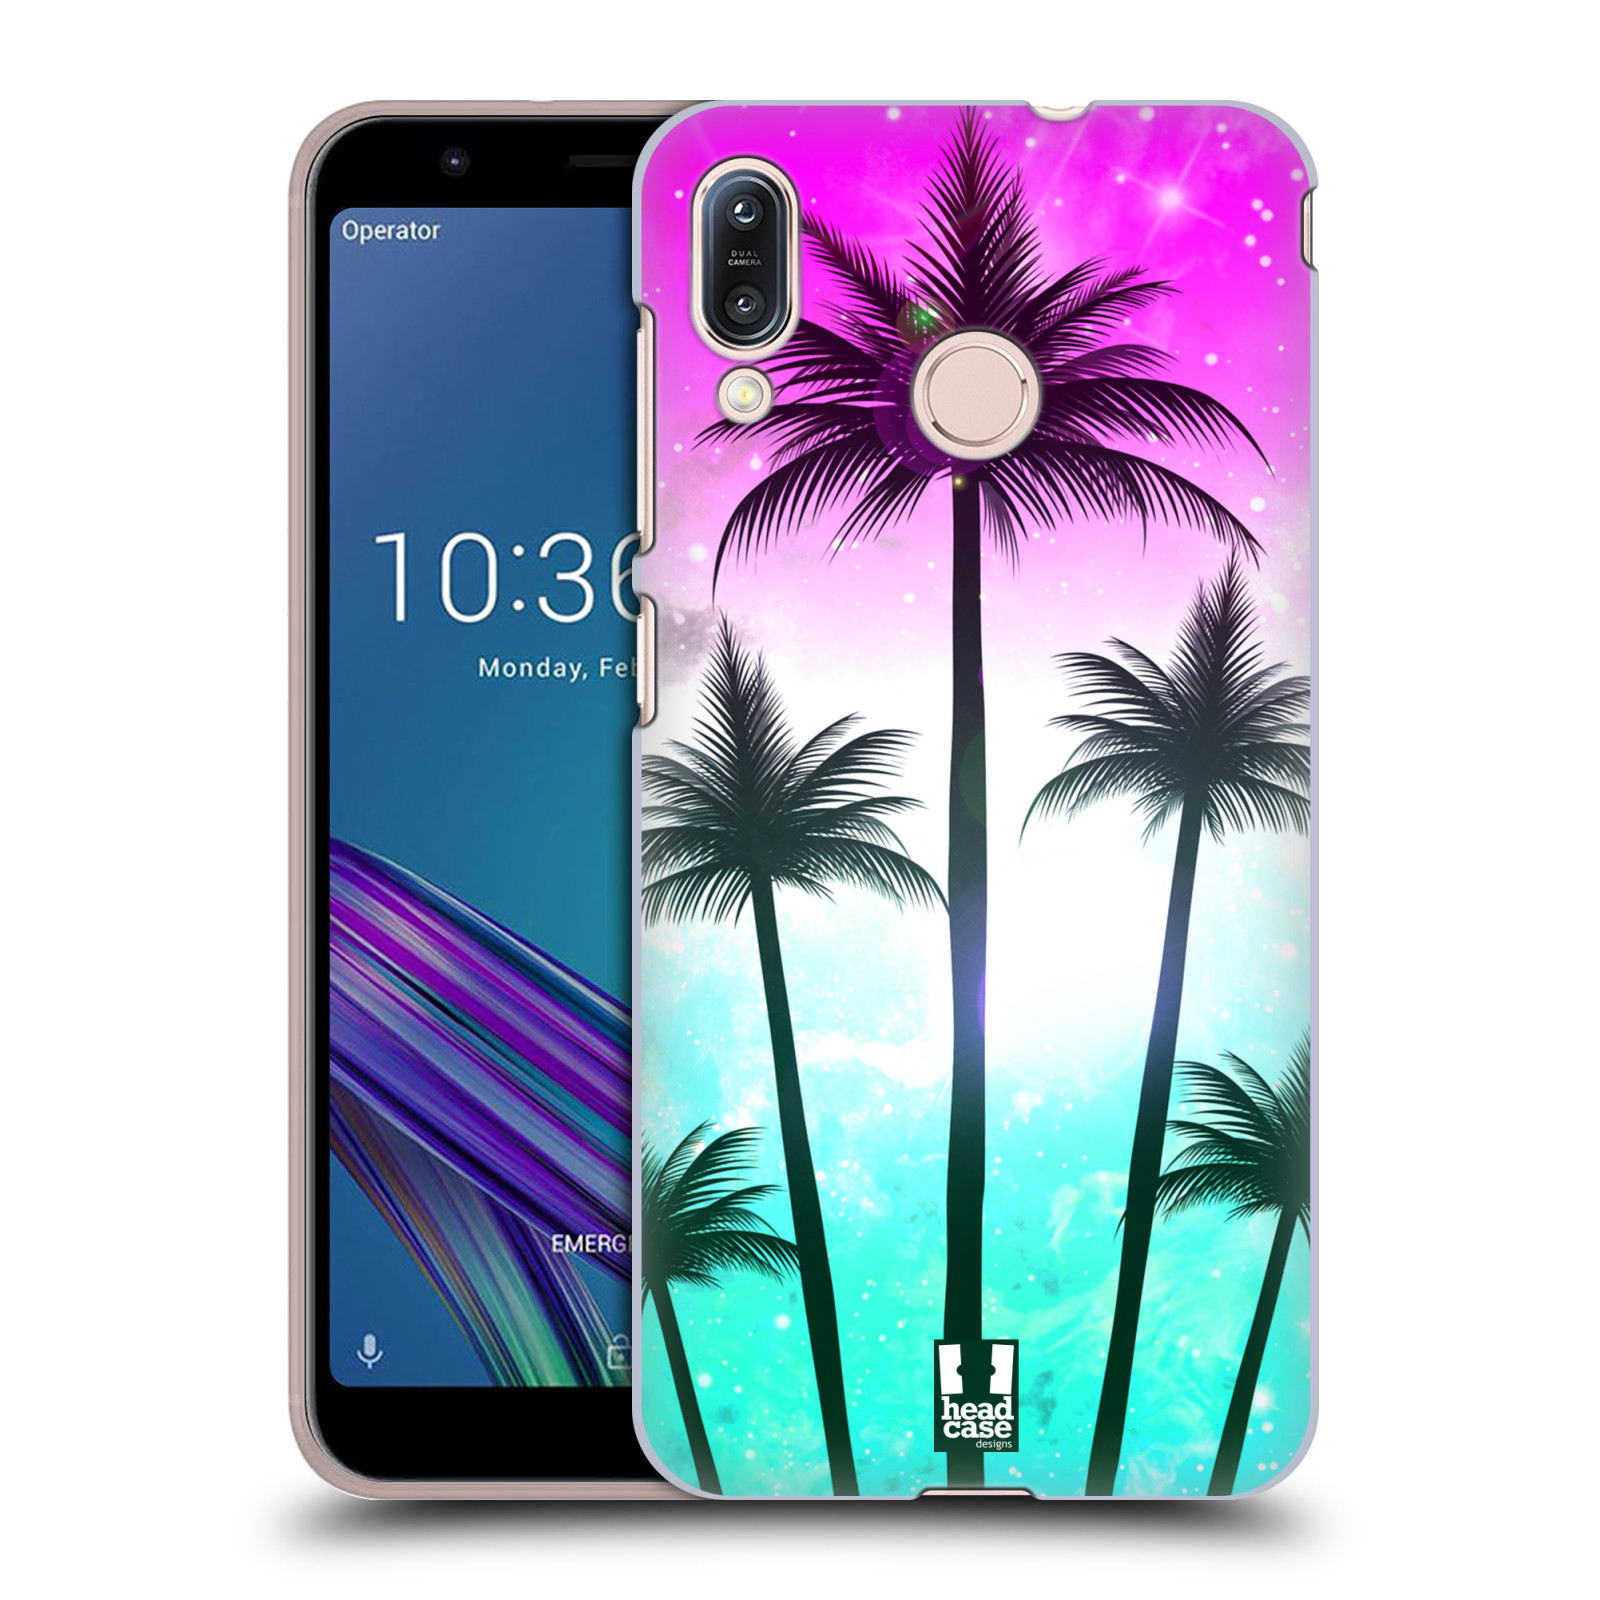 Pouzdro na mobil Asus Zenfone Max M1 (ZB555KL) - HEAD CASE - vzor Kreslený motiv silueta moře a palmy RŮŽOVÁ A TYRKYS